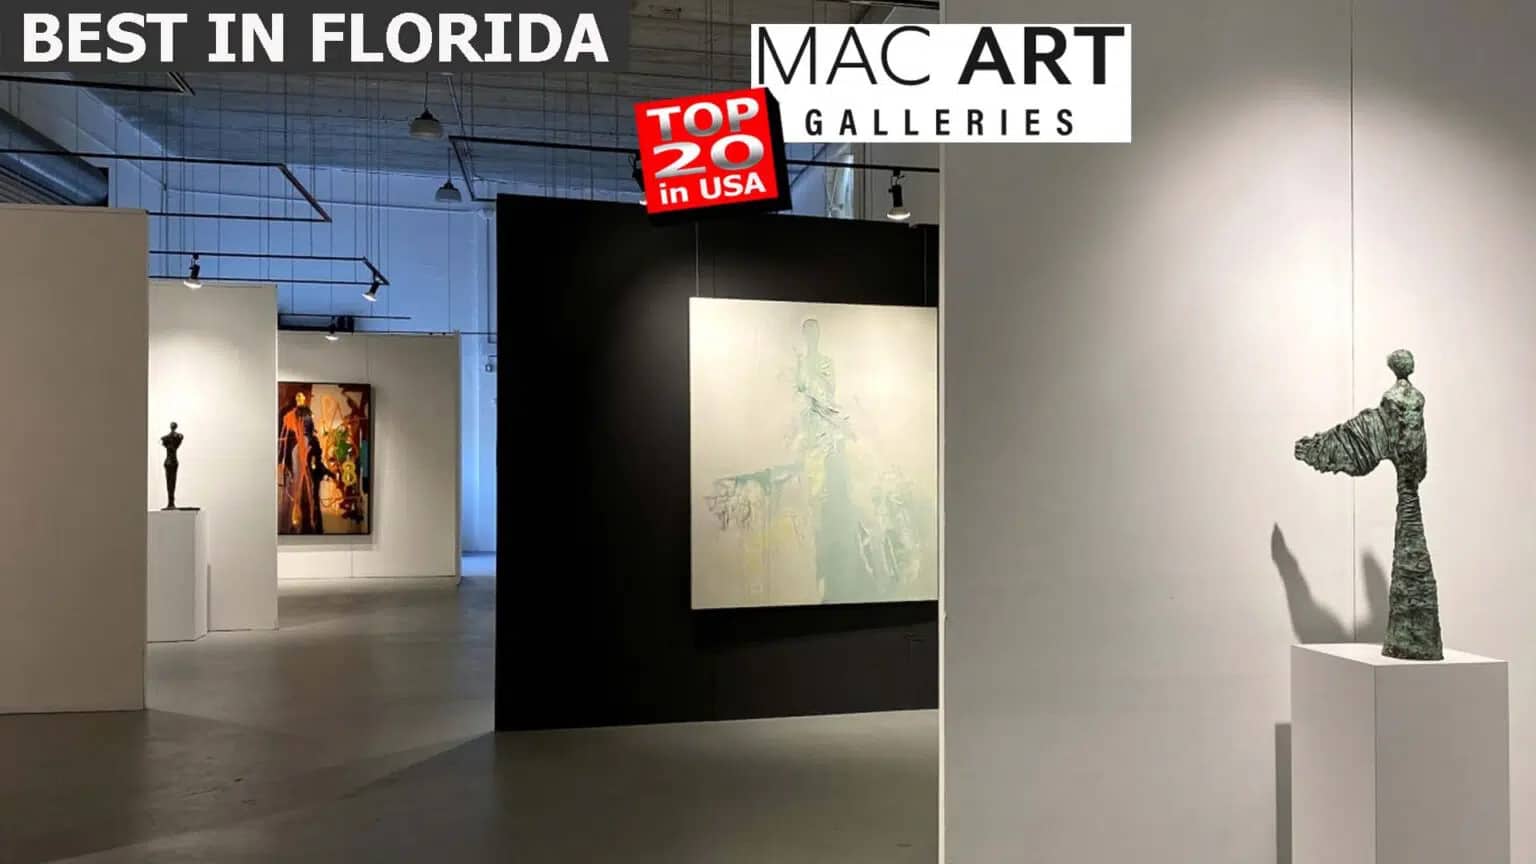 MAC Art Galleries Awarded Best in Florida